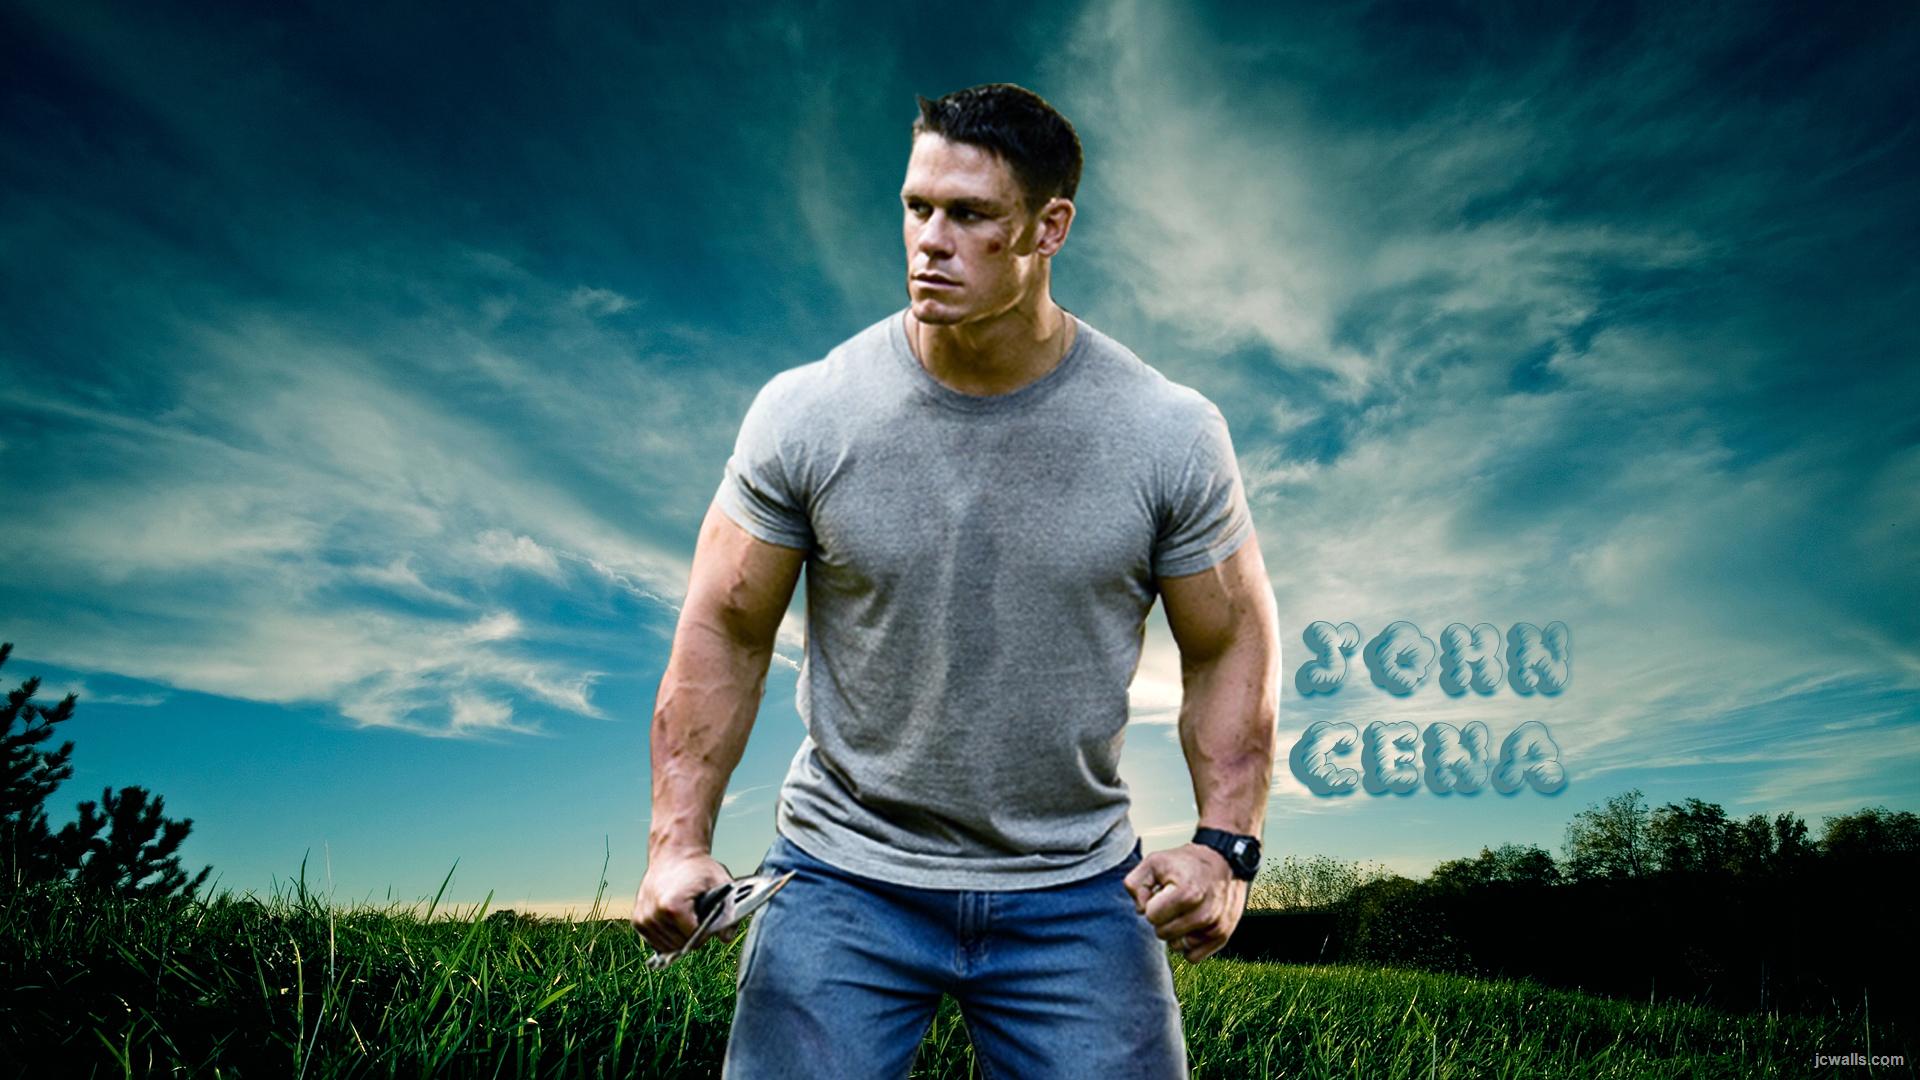 John Cena 2016 Wallpaper, Download Free HD Wallpaper